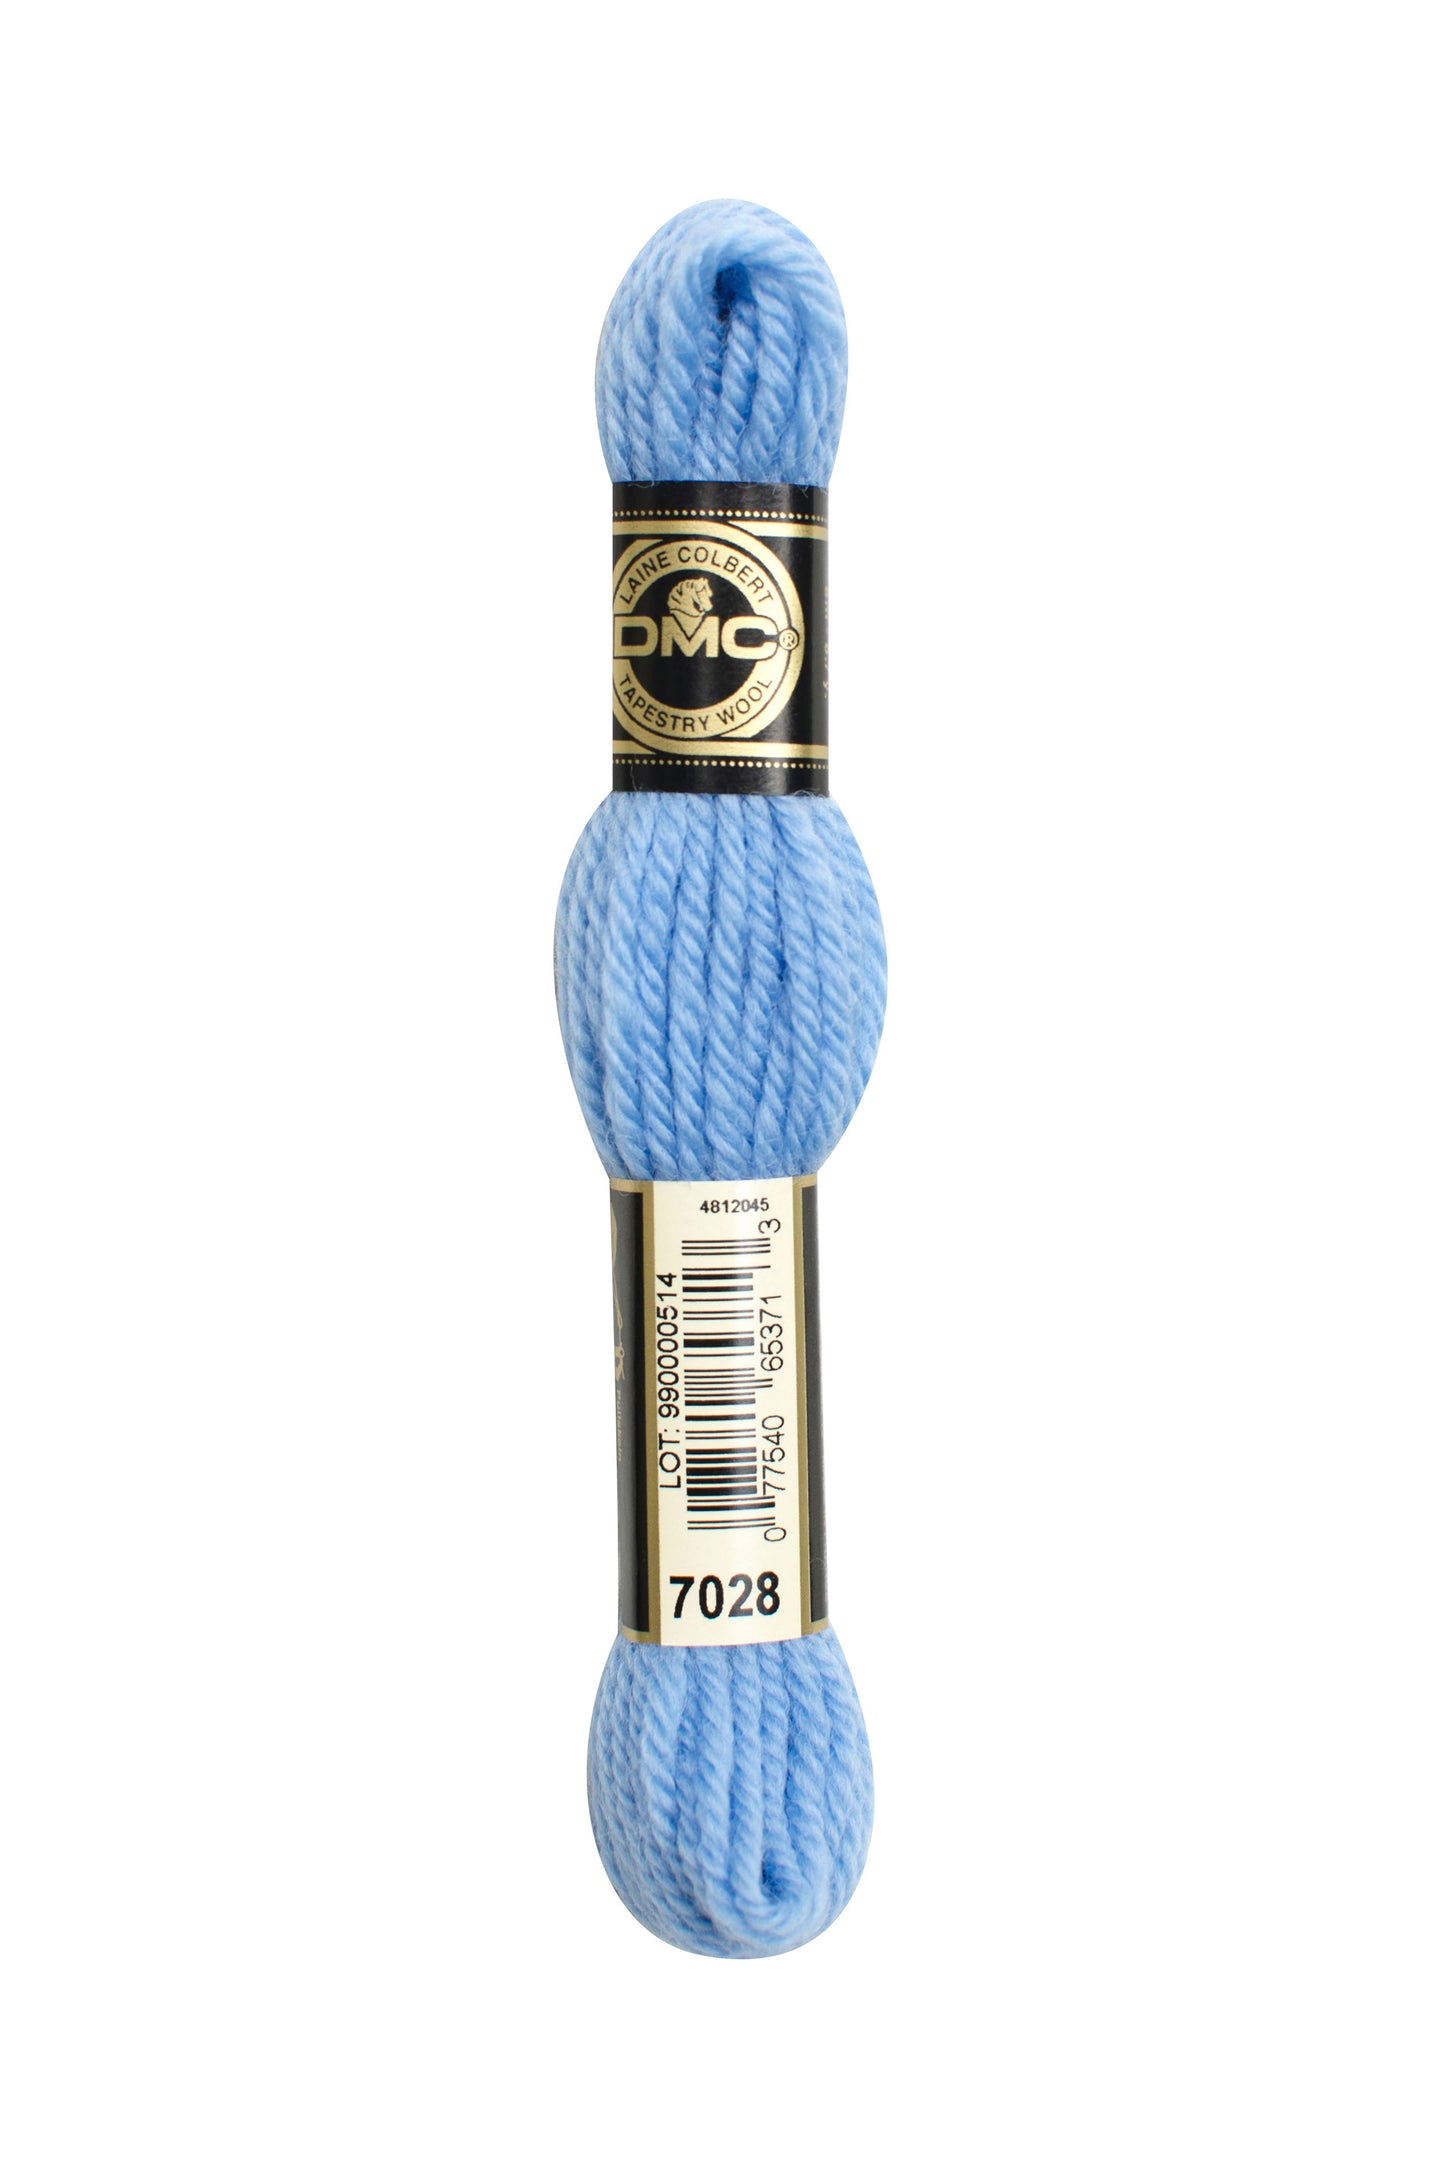 7028 – DMC Tapestry Wool